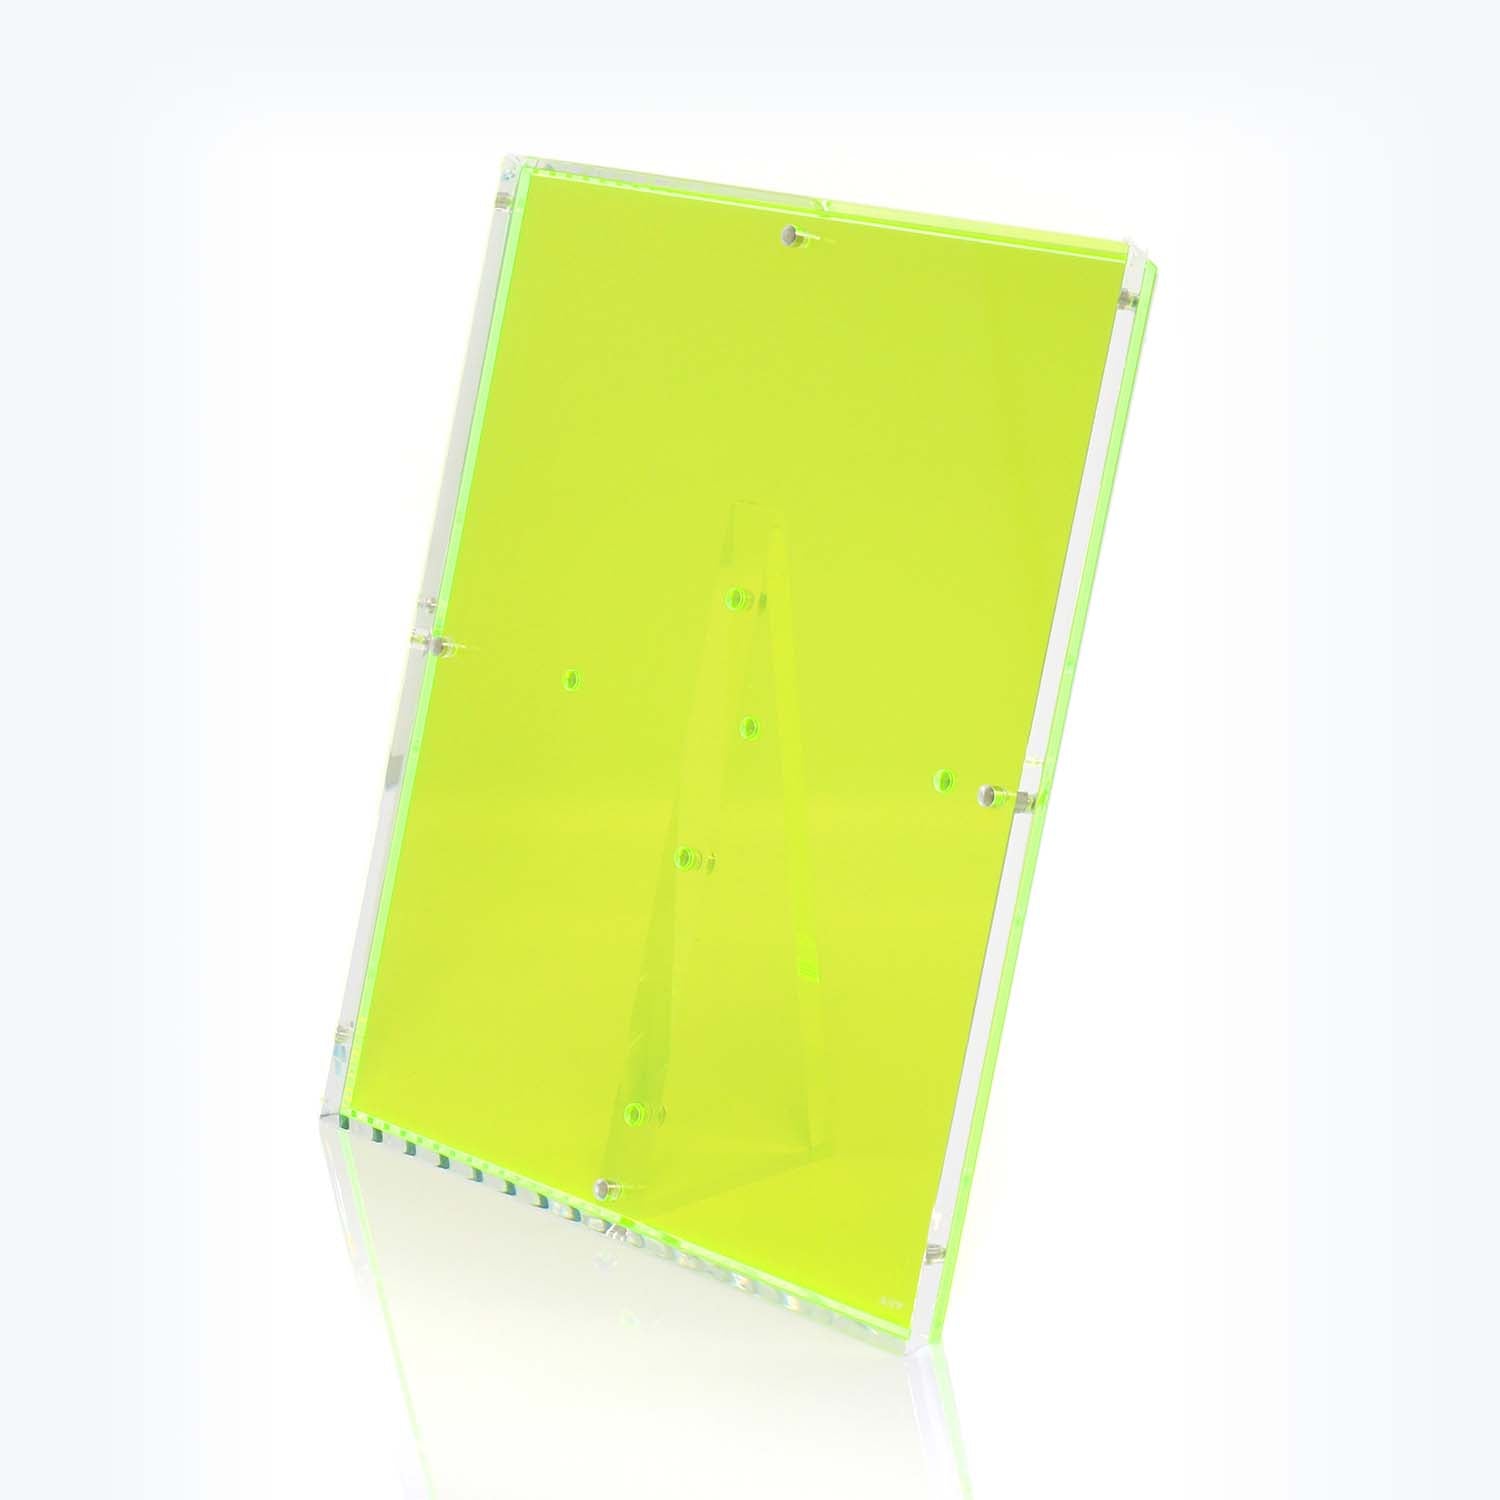 Neon green acrylic brochure holder with a sleek, modern design.